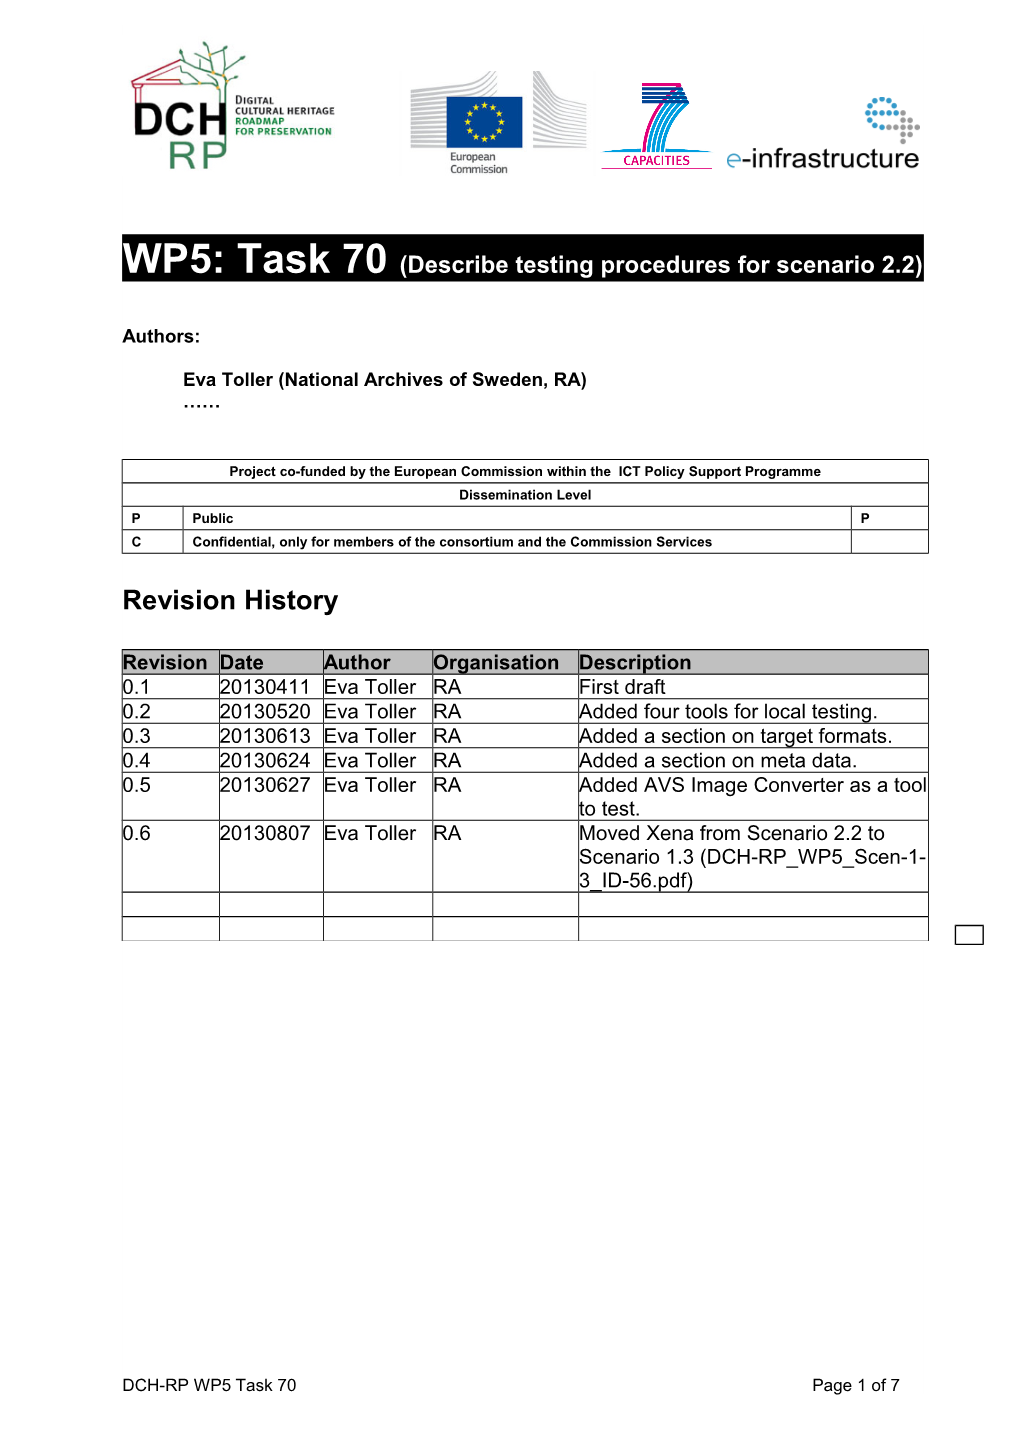 WP5: Task 51 (Decide on Test Data for Scenario 1